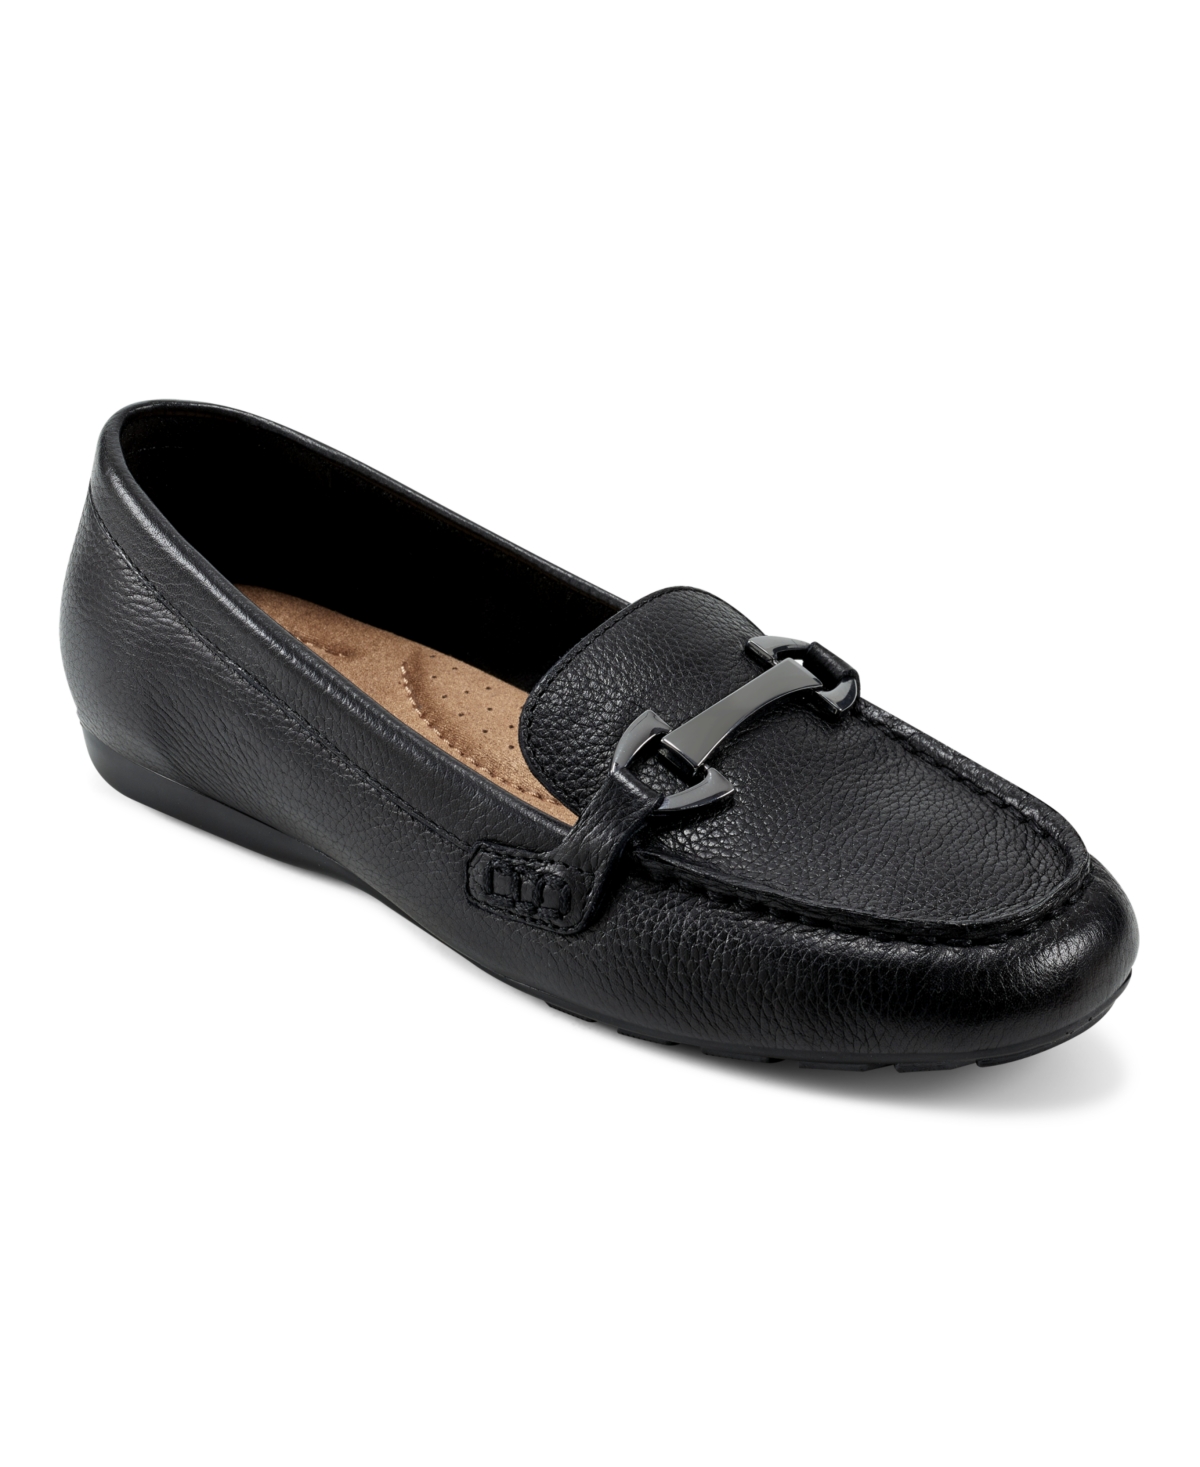 Women's Eflex Marlie Slip-On Casual Loafers - Black Leather